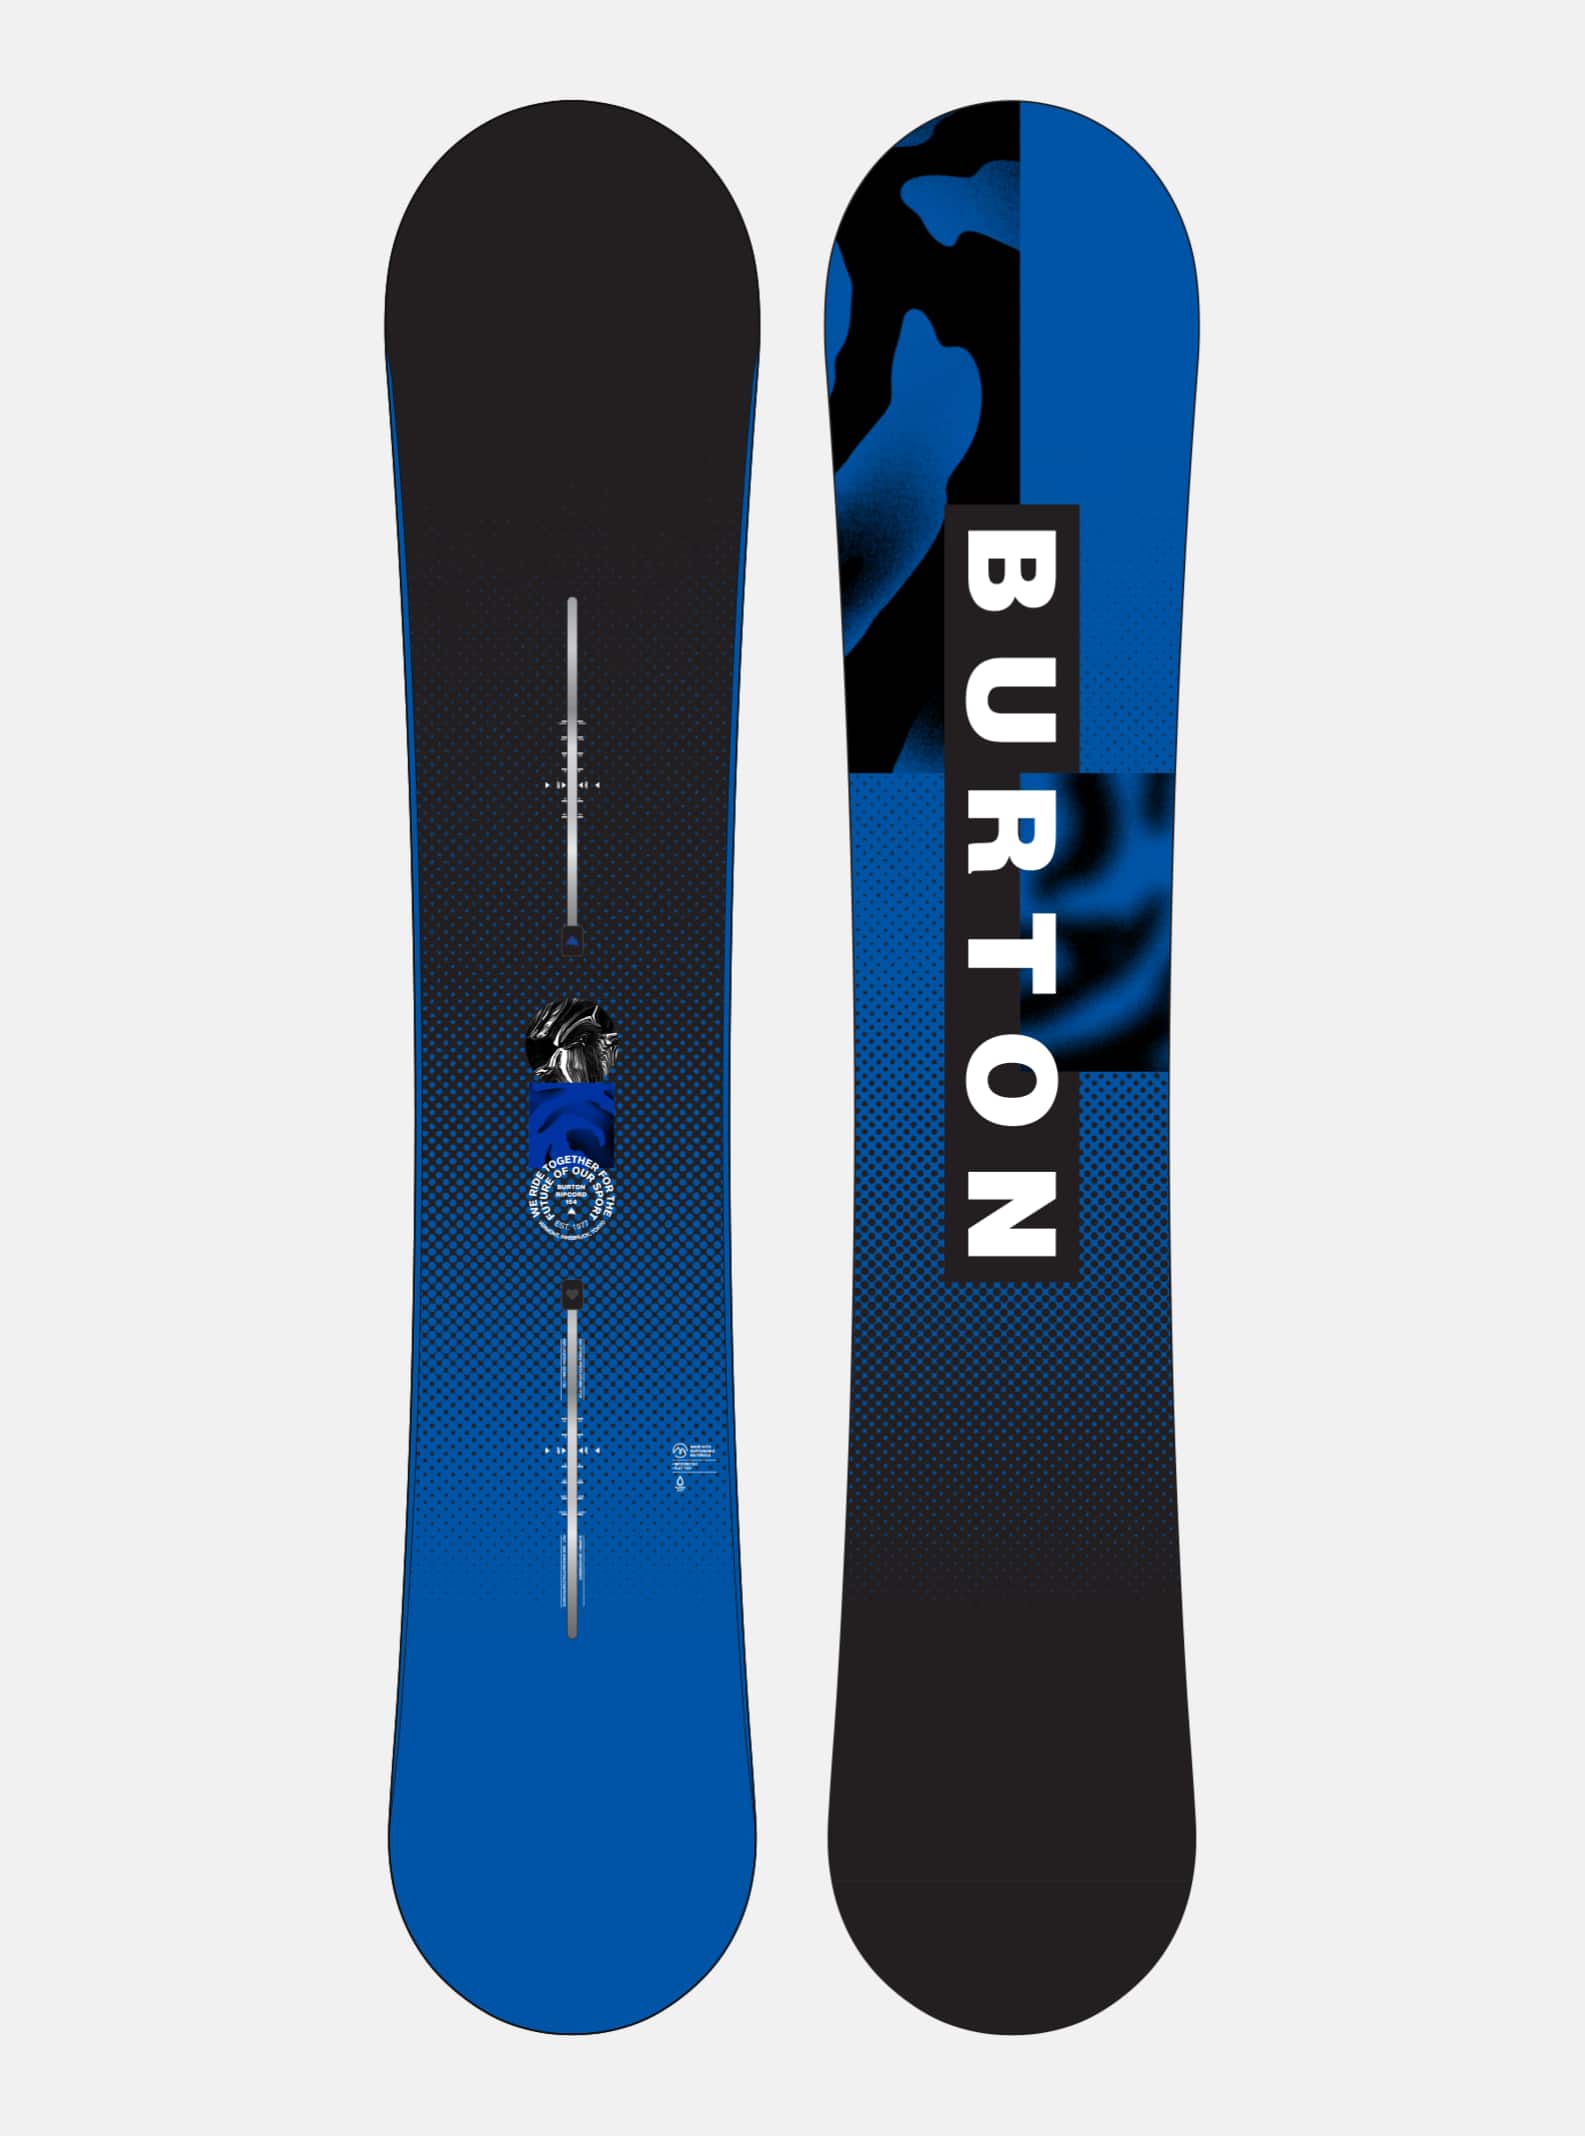 Men's Burton Snowboards | All Mountain, Park & Powder | Burton Snowboards US